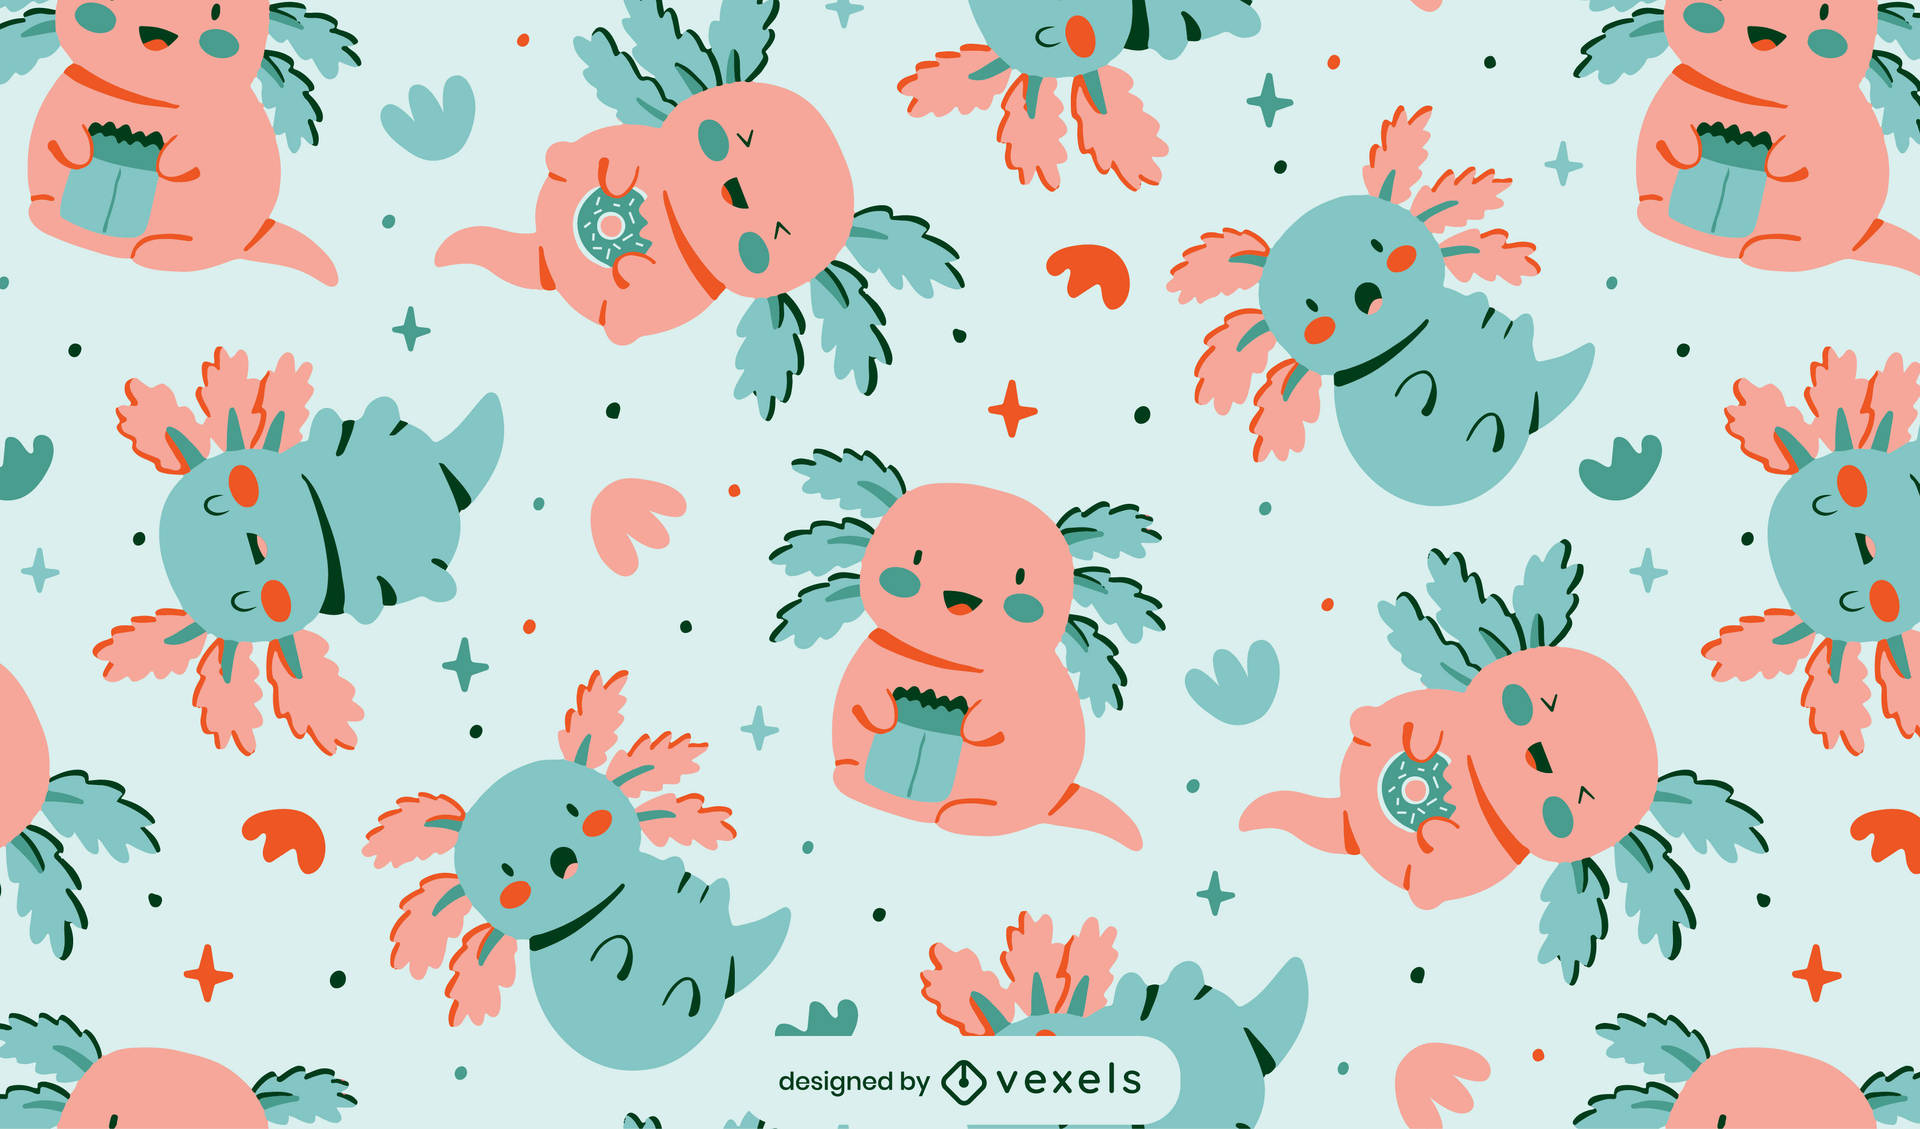 Axolotl Wallpaper & Background For FREE